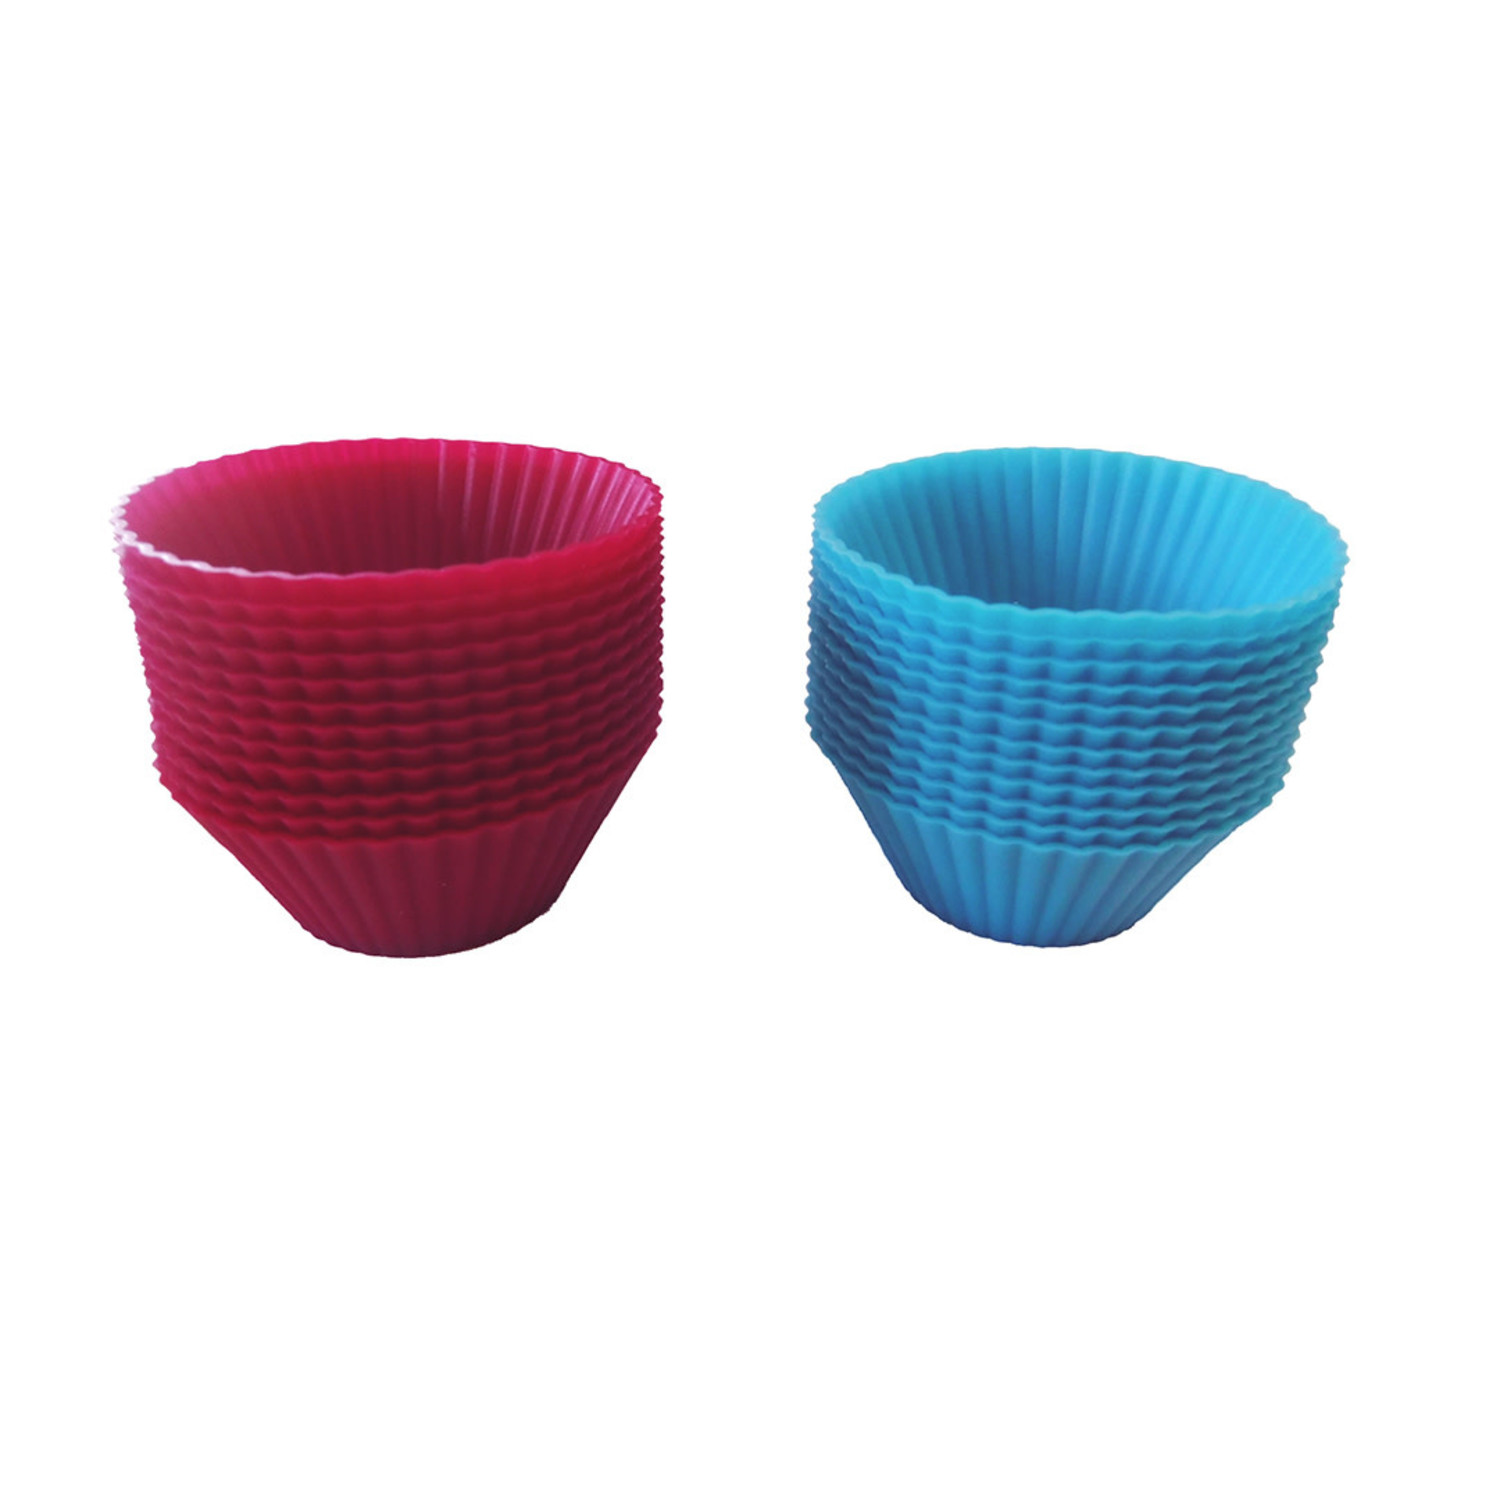 https://cdn.shoplightspeed.com/shops/630188/files/36316703/1500x4000x3/trudeau-set-of-24-silicone-muffin-cups-fuscia-and.jpg